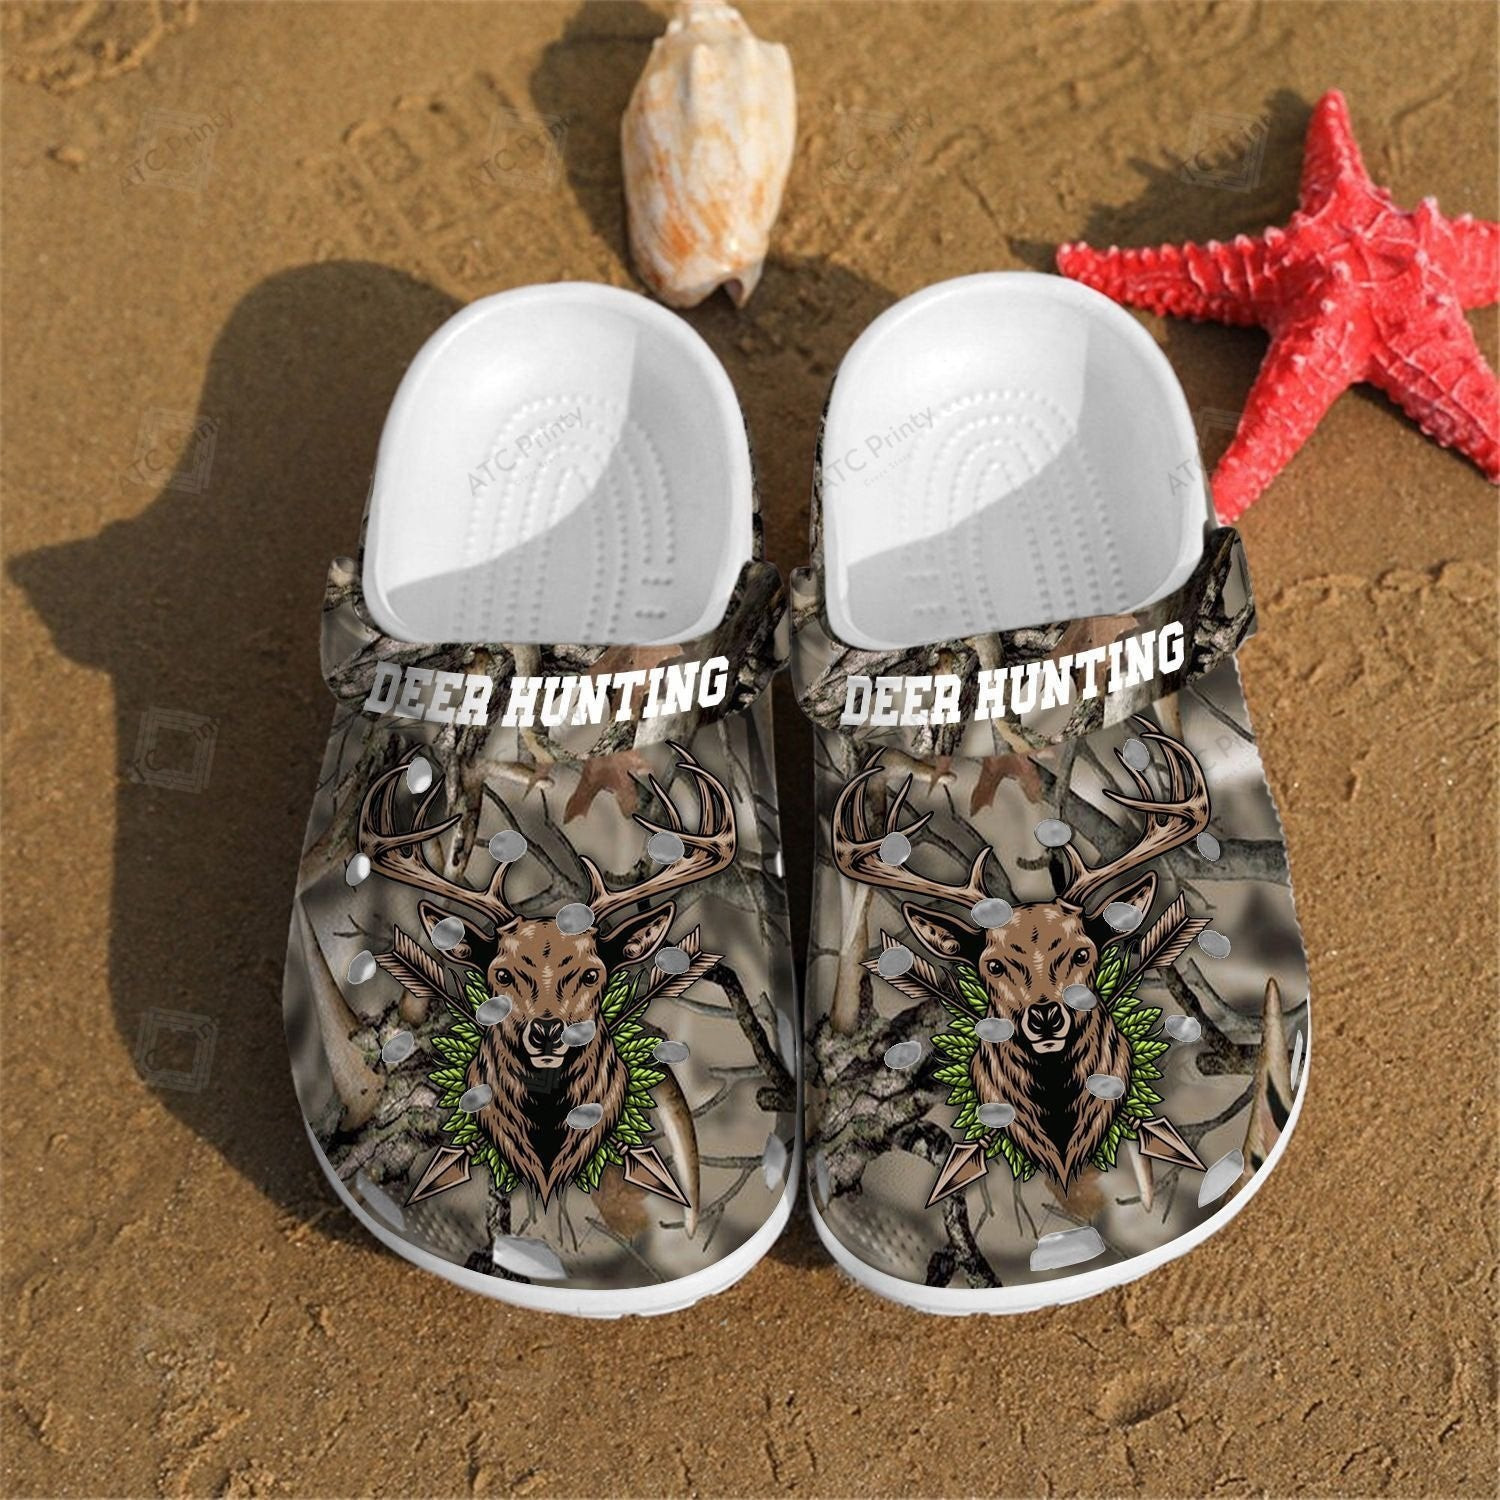 Deer Hunting Croc Crocs Shoes For Men - Deer Crocs Shoes Crocbland Clog Gifts For Father Day